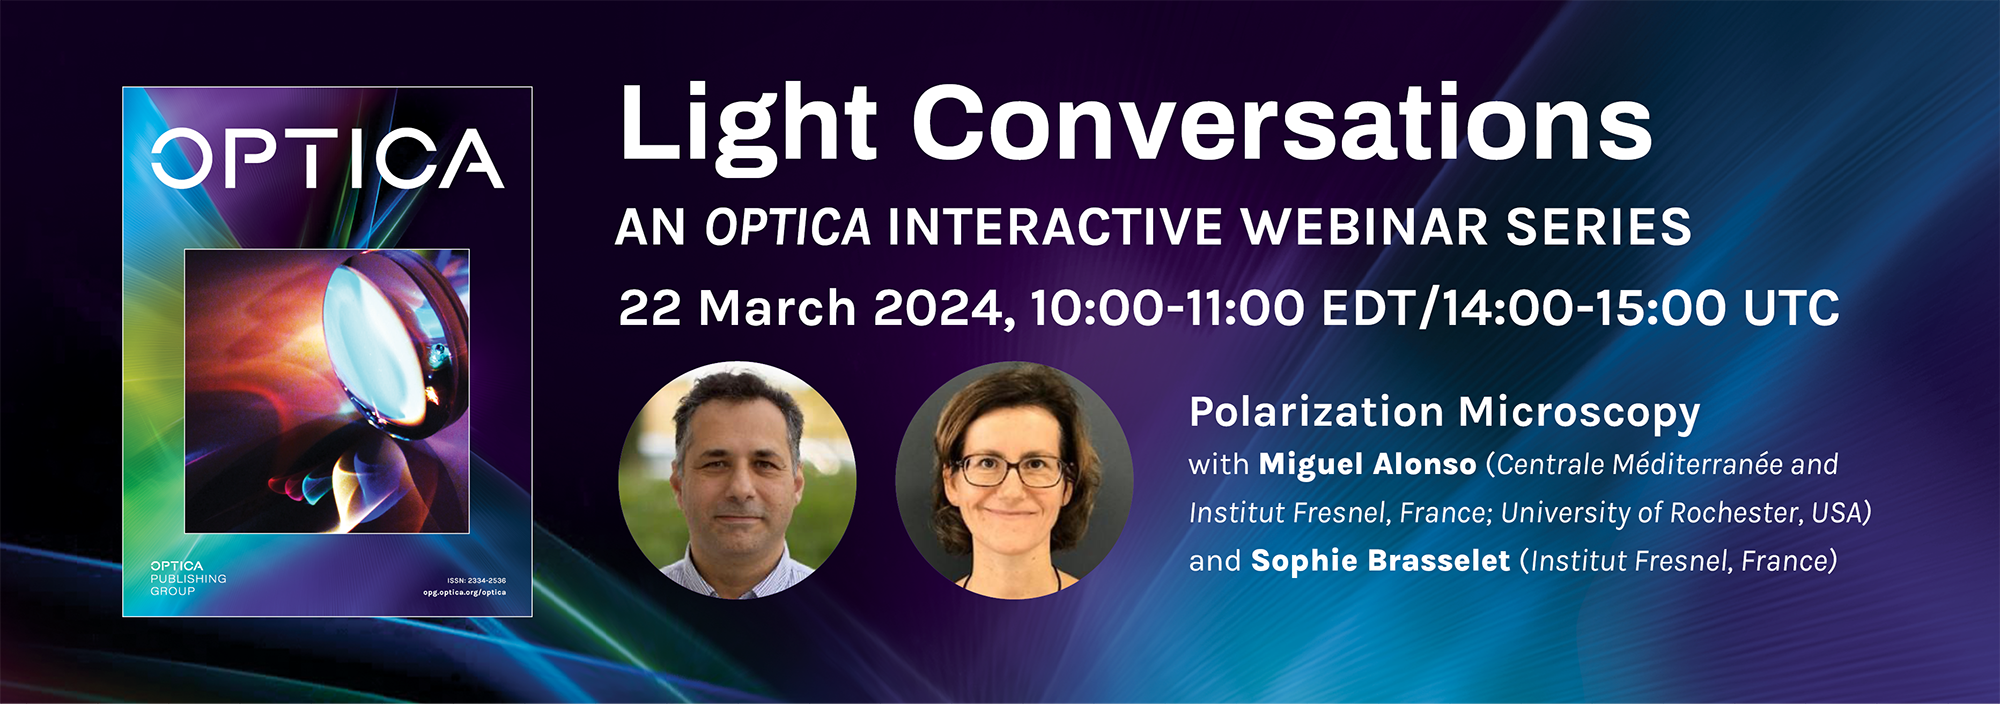 Optica Light Conversations #7